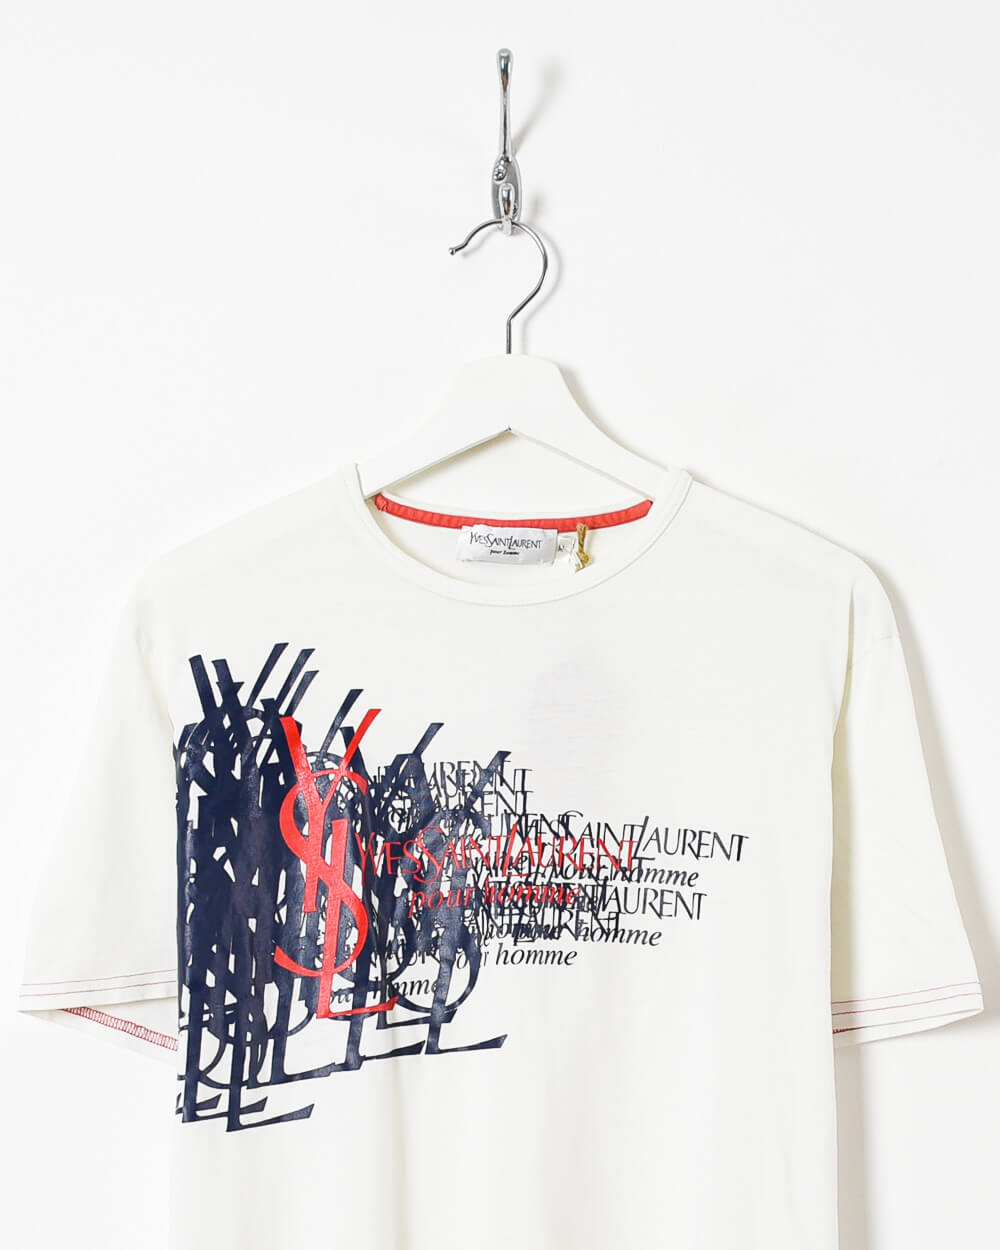 White Yves Saint Laurent Pour Homme T-Shirt - Small